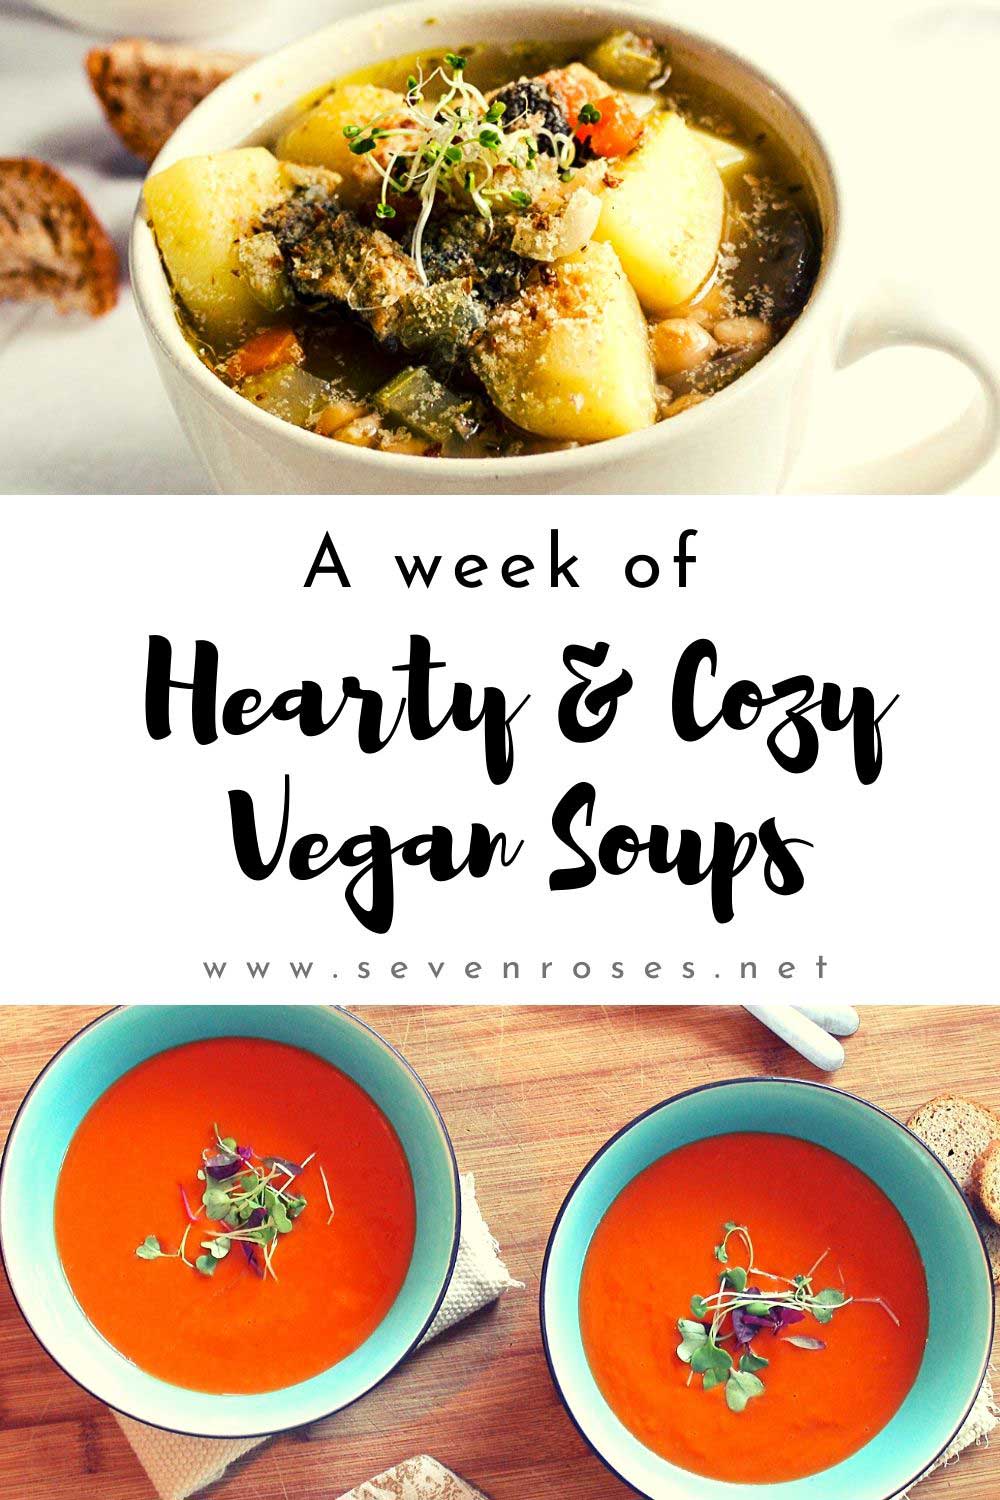 Hearty Vegan soups